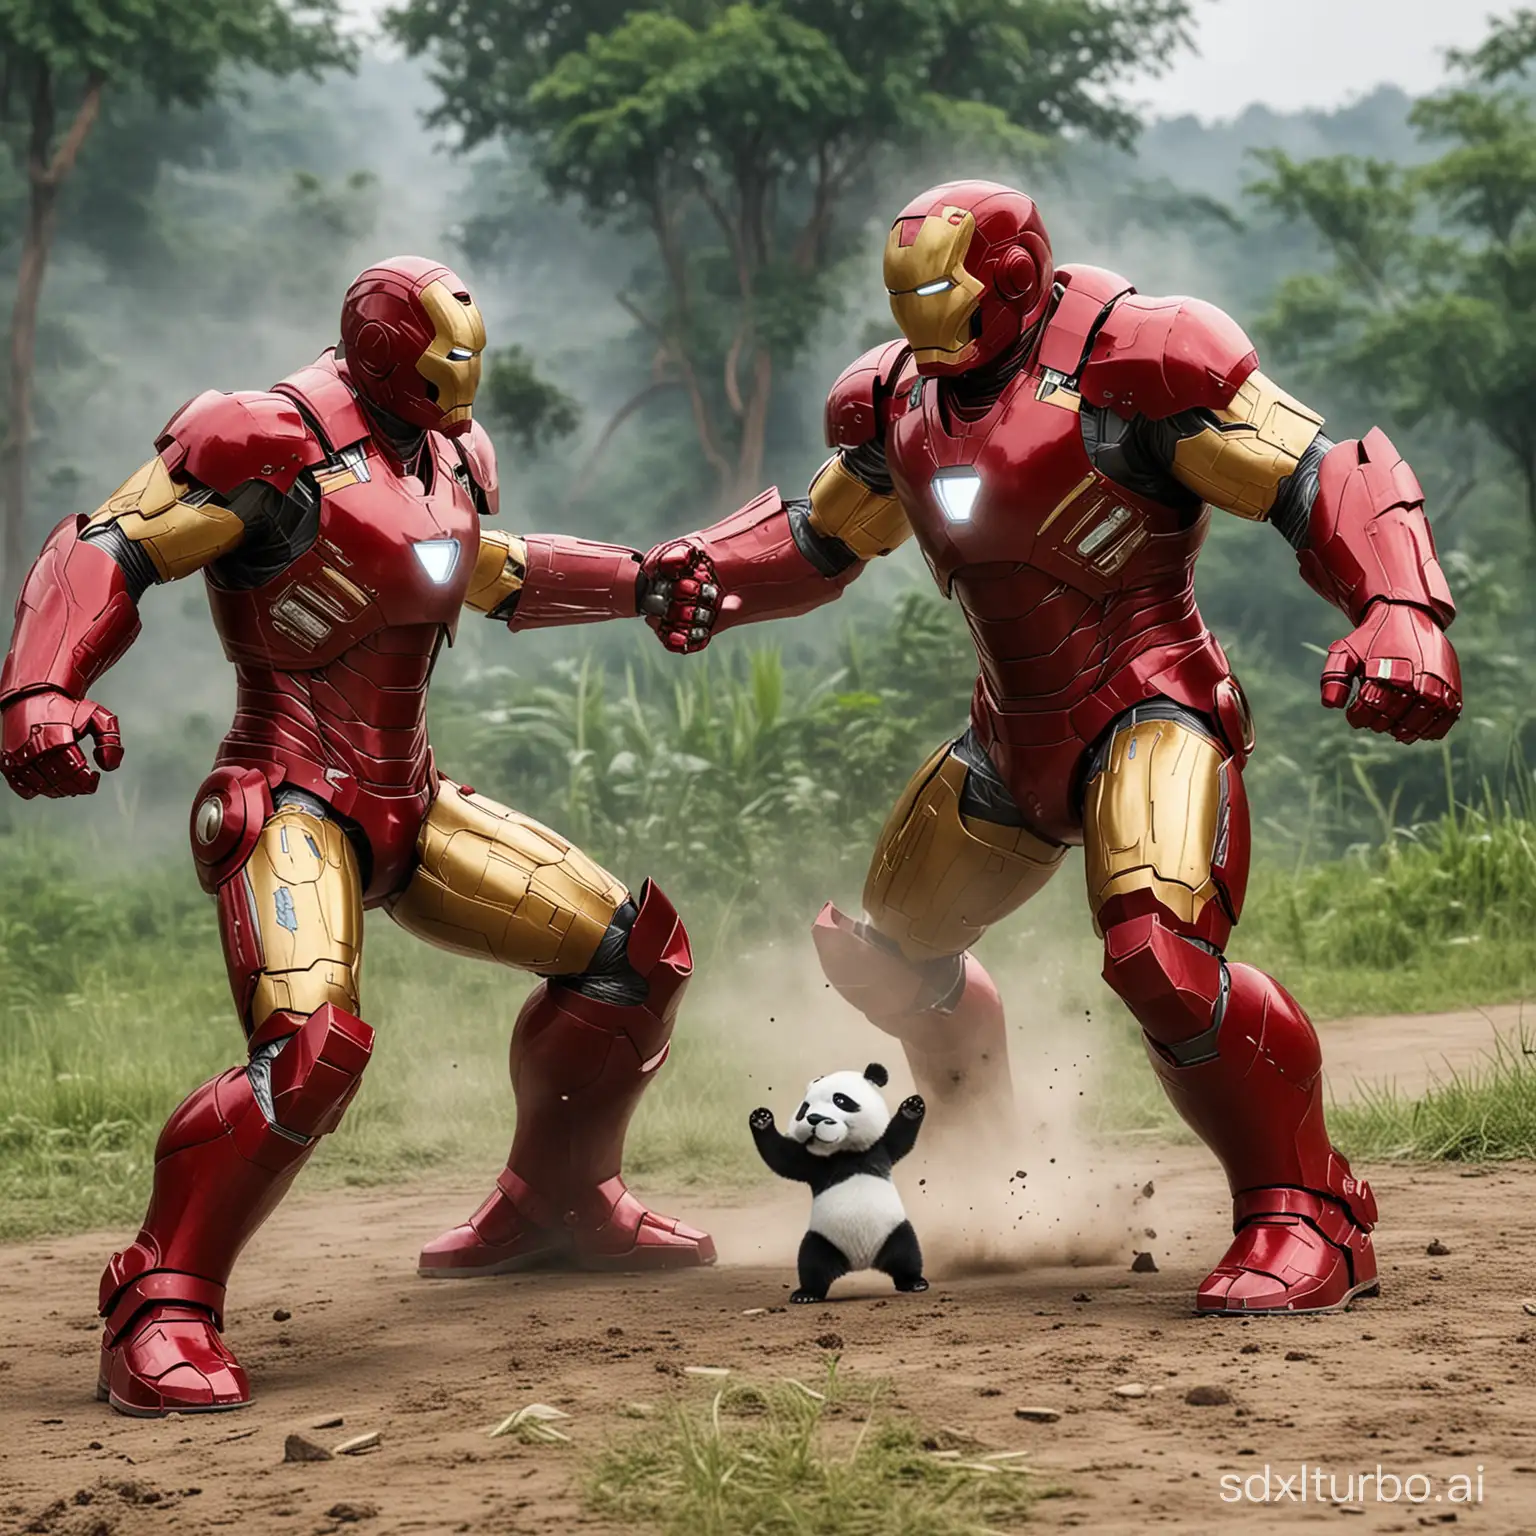 Iron man fighting with Panda